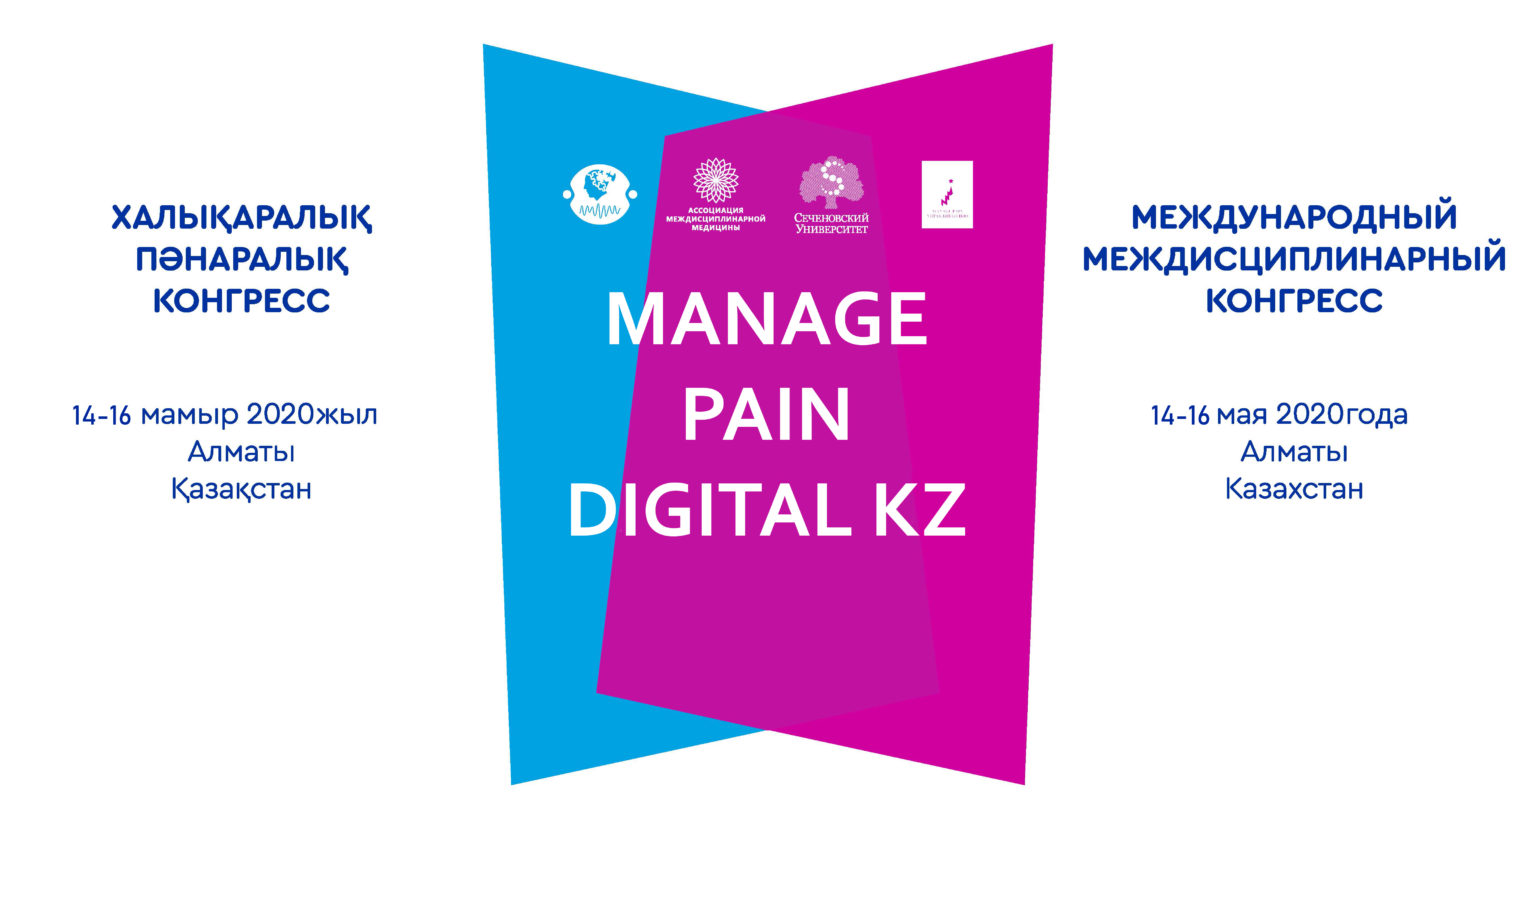 Manage Pain Digital KZ